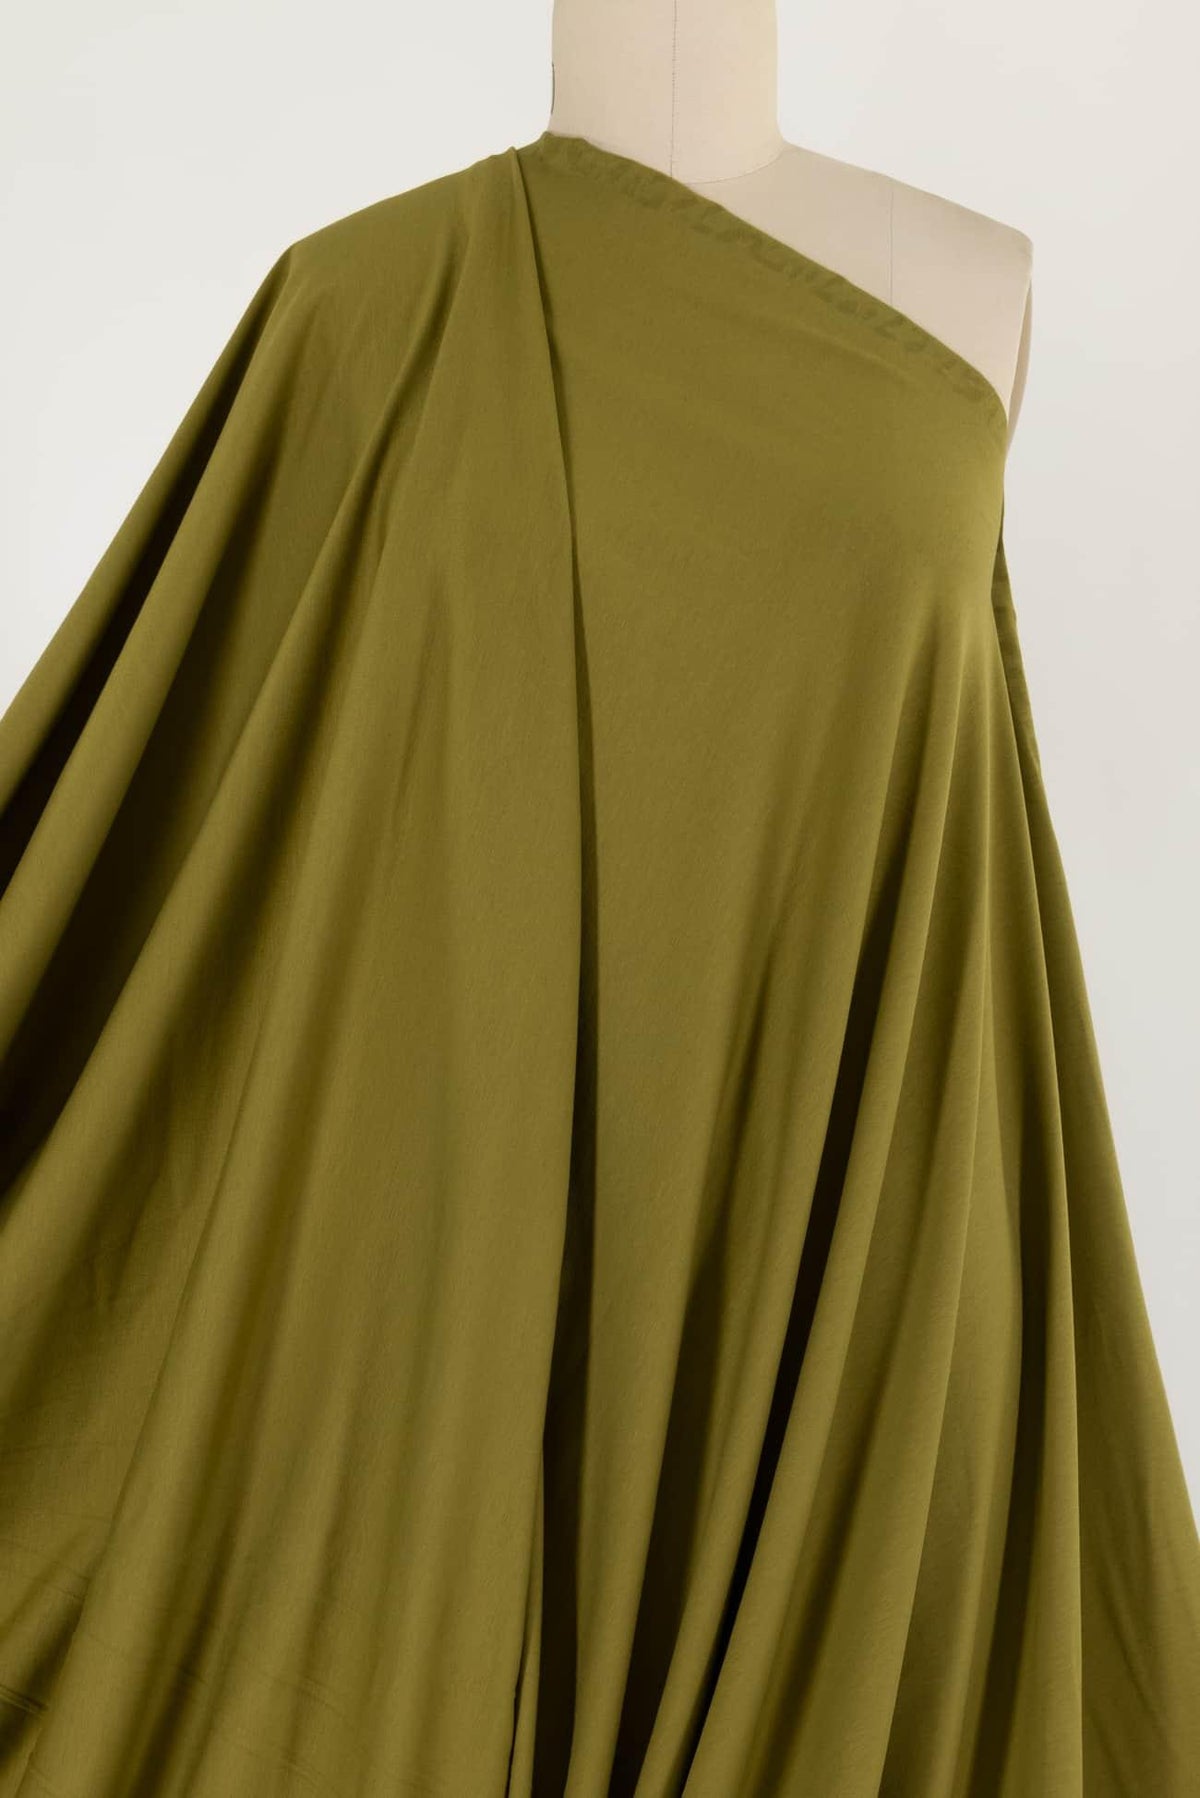 Absinthe Green Cotton/Spandex Knit - Marcy Tilton Fabrics